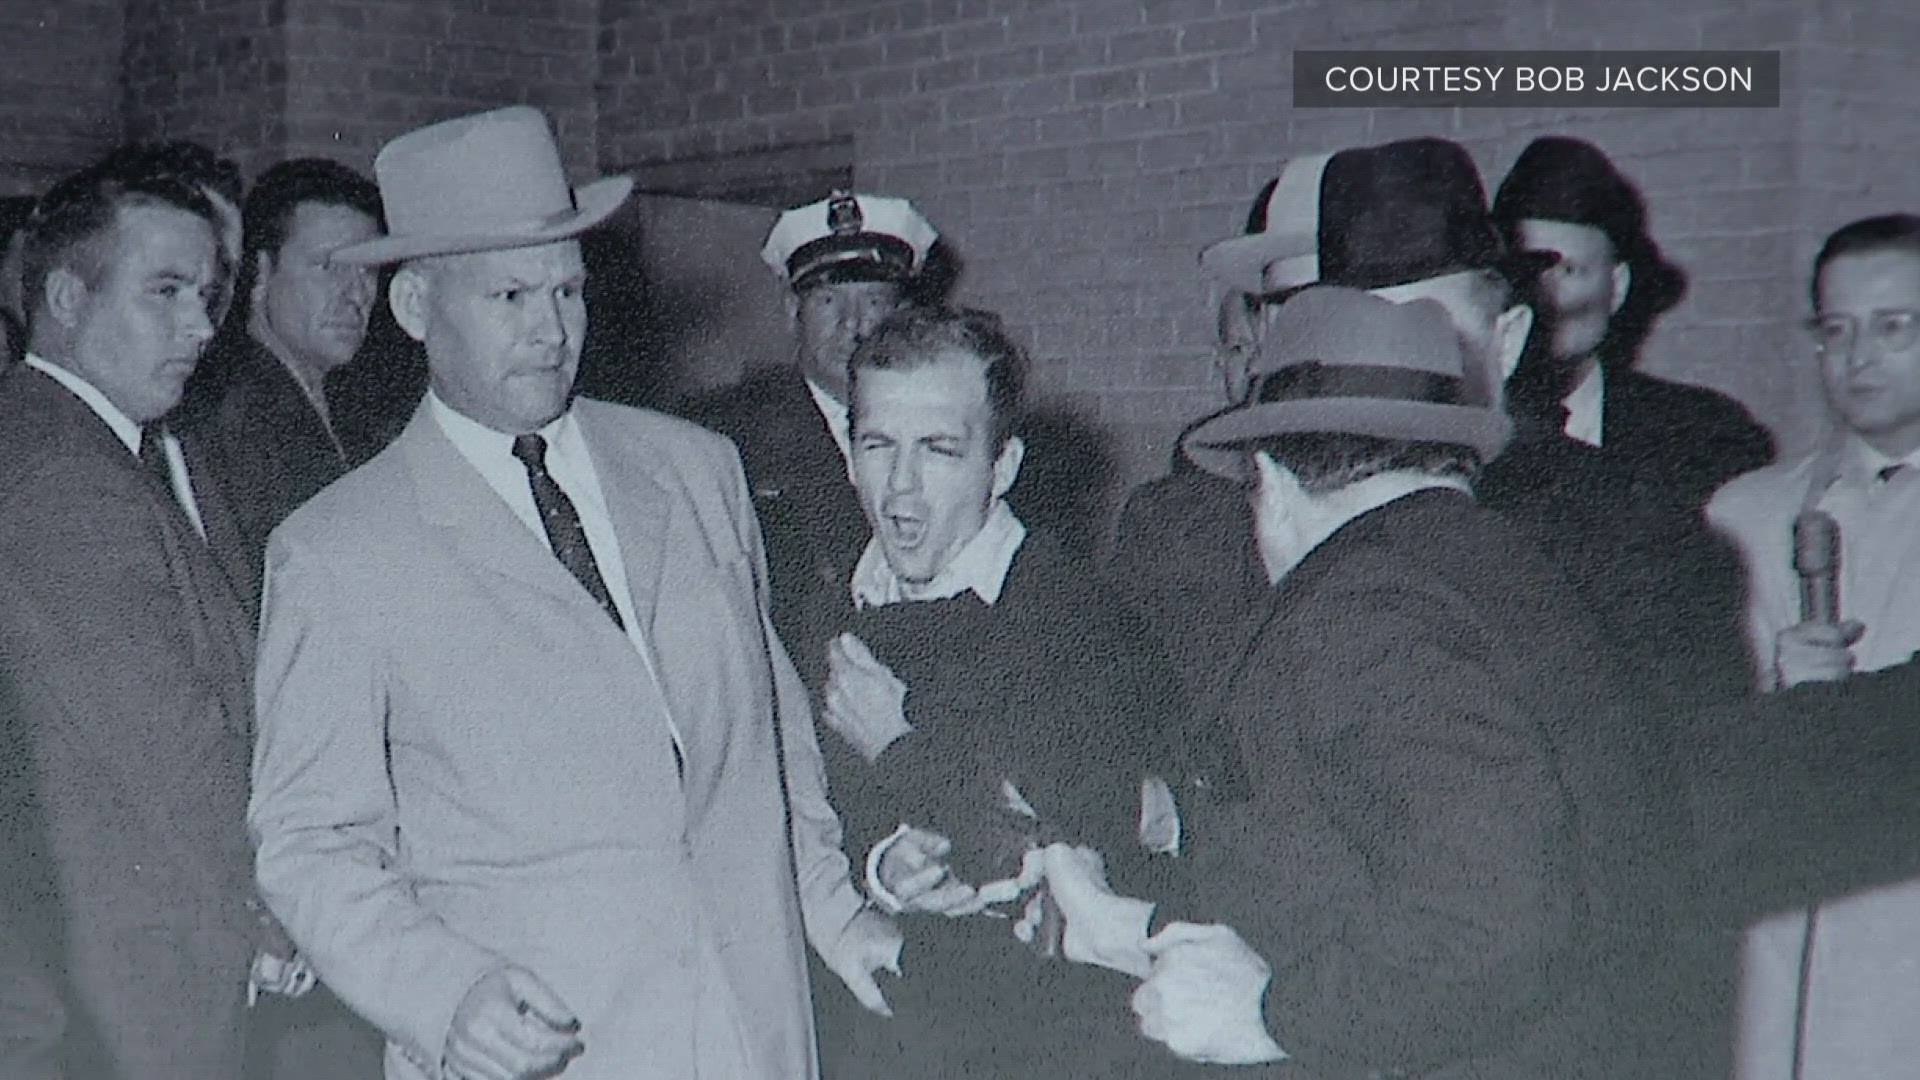 Two days after John F. Kennedy's assassination, Photographer Bob Jackson captured the killing of Lee Harvey Oswald.